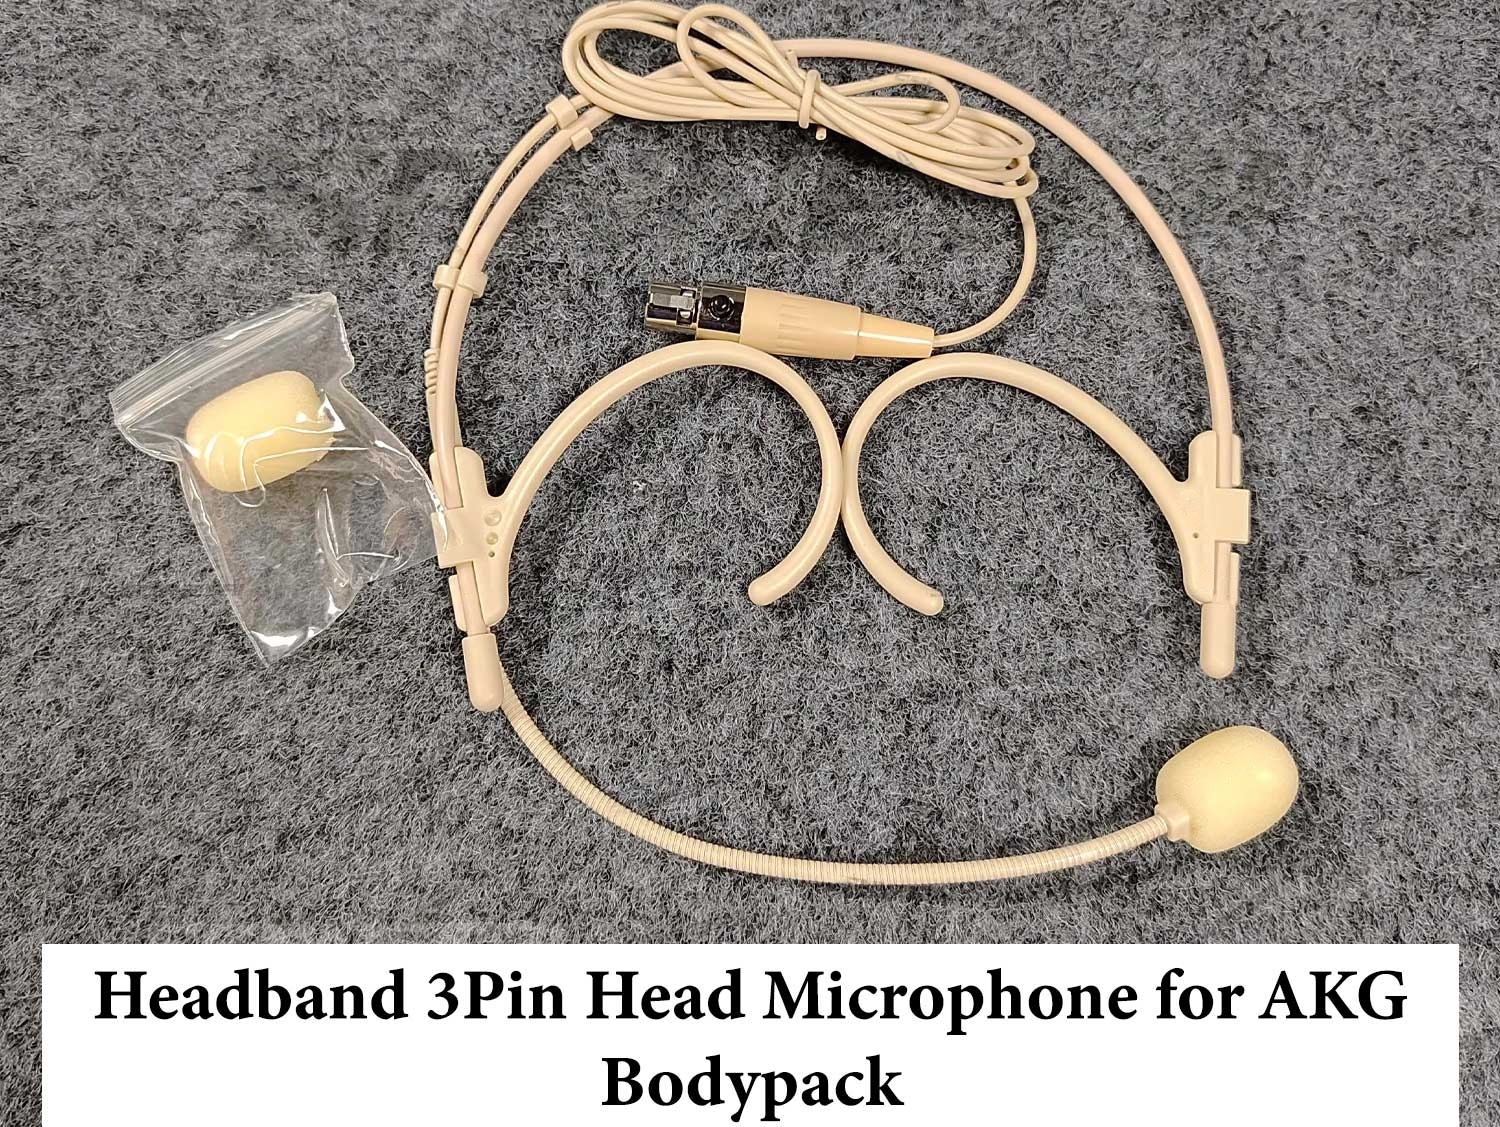 3Pin Headband Microphone for AKG Bodypack